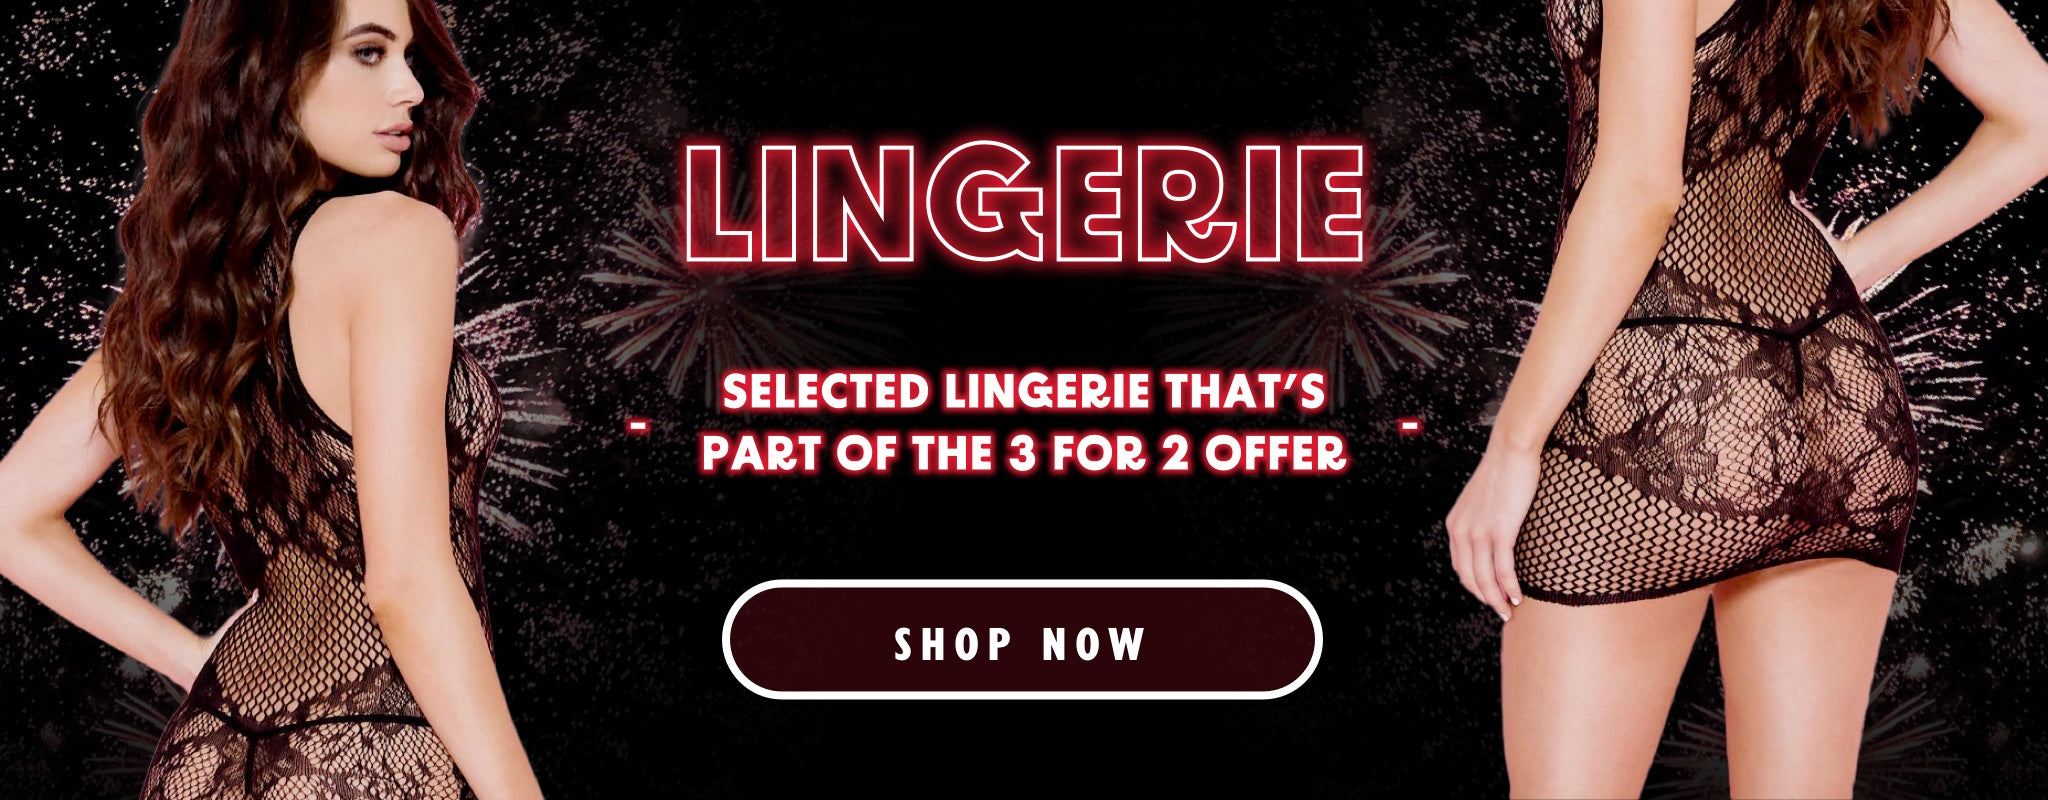 “lingerie-sub-banner-image”